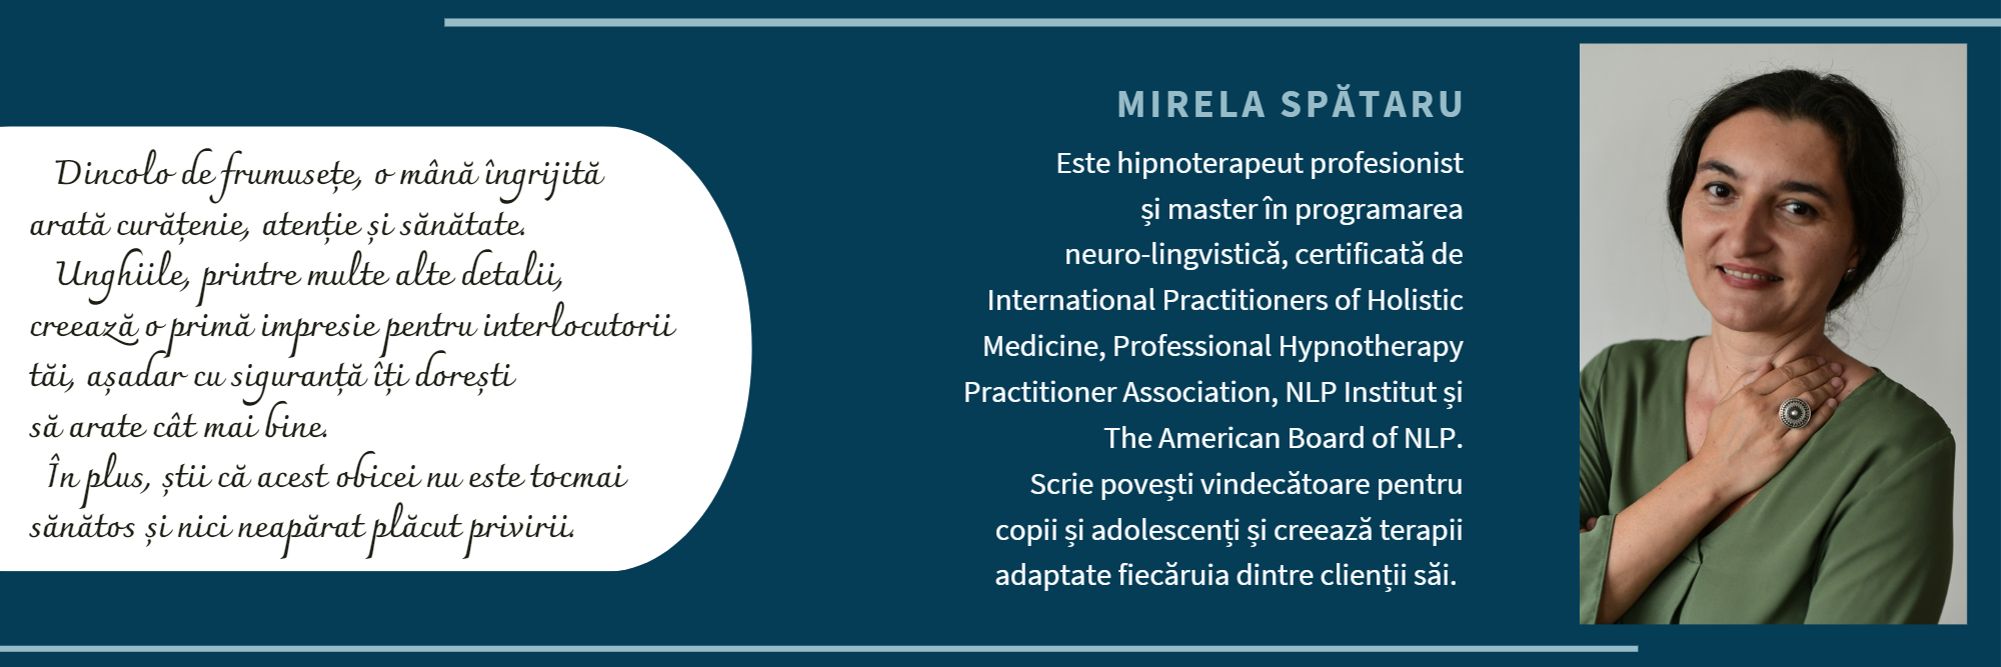 Mirela Spataru hipnoterapeut